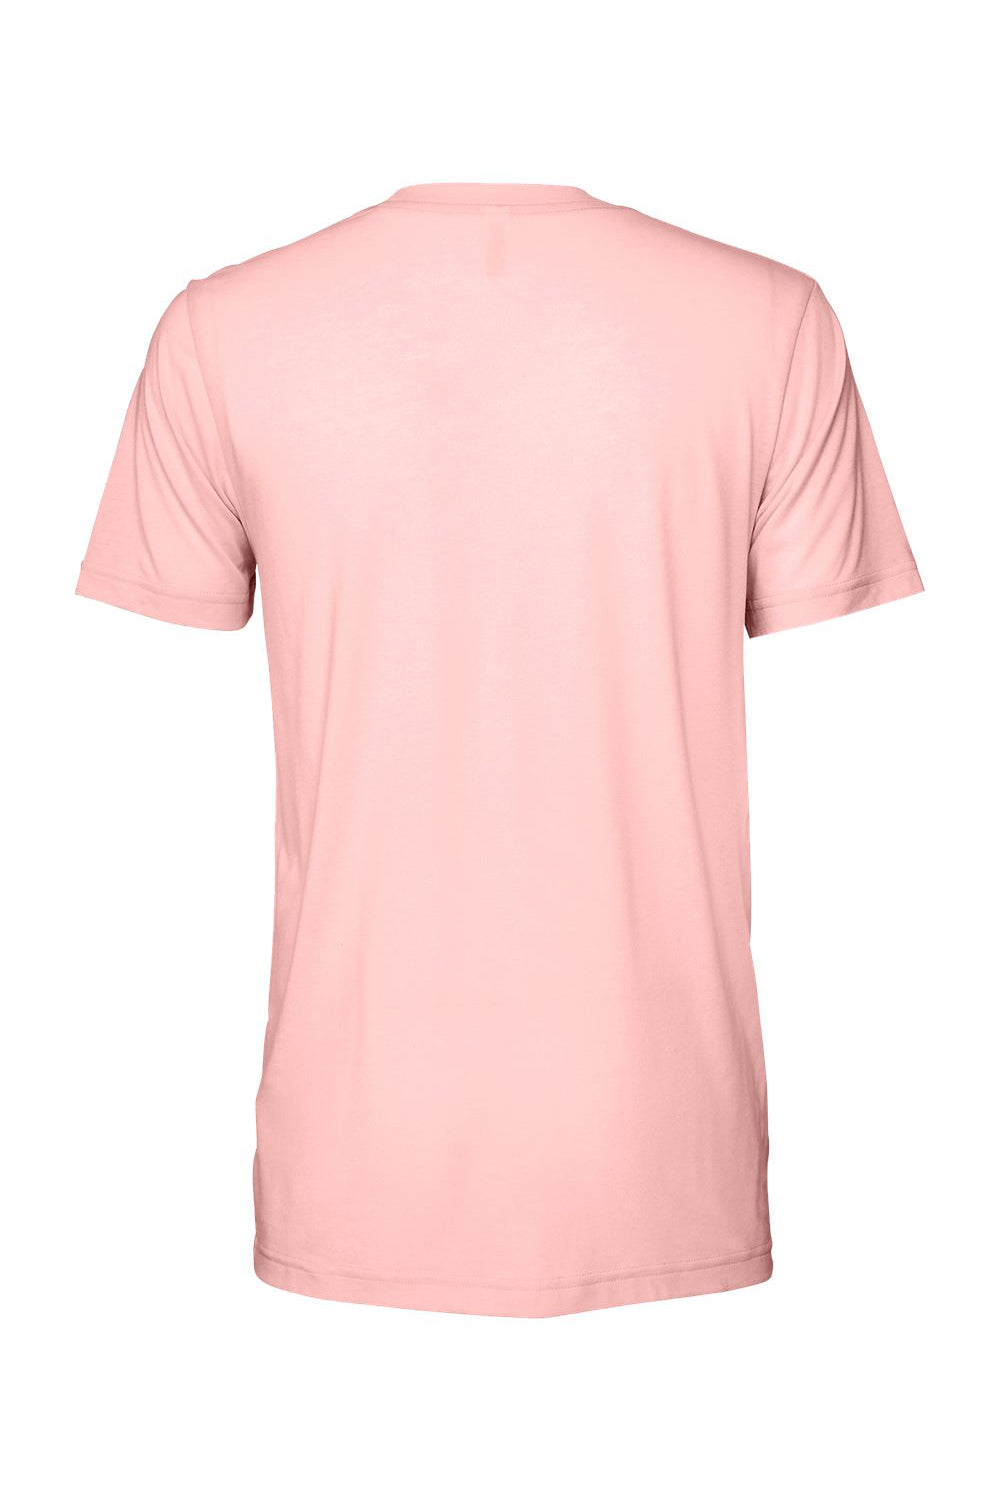 Bella + Canvas BC3413/3413C/3413 Mens Short Sleeve Crewneck T-Shirt Pink Flat Back